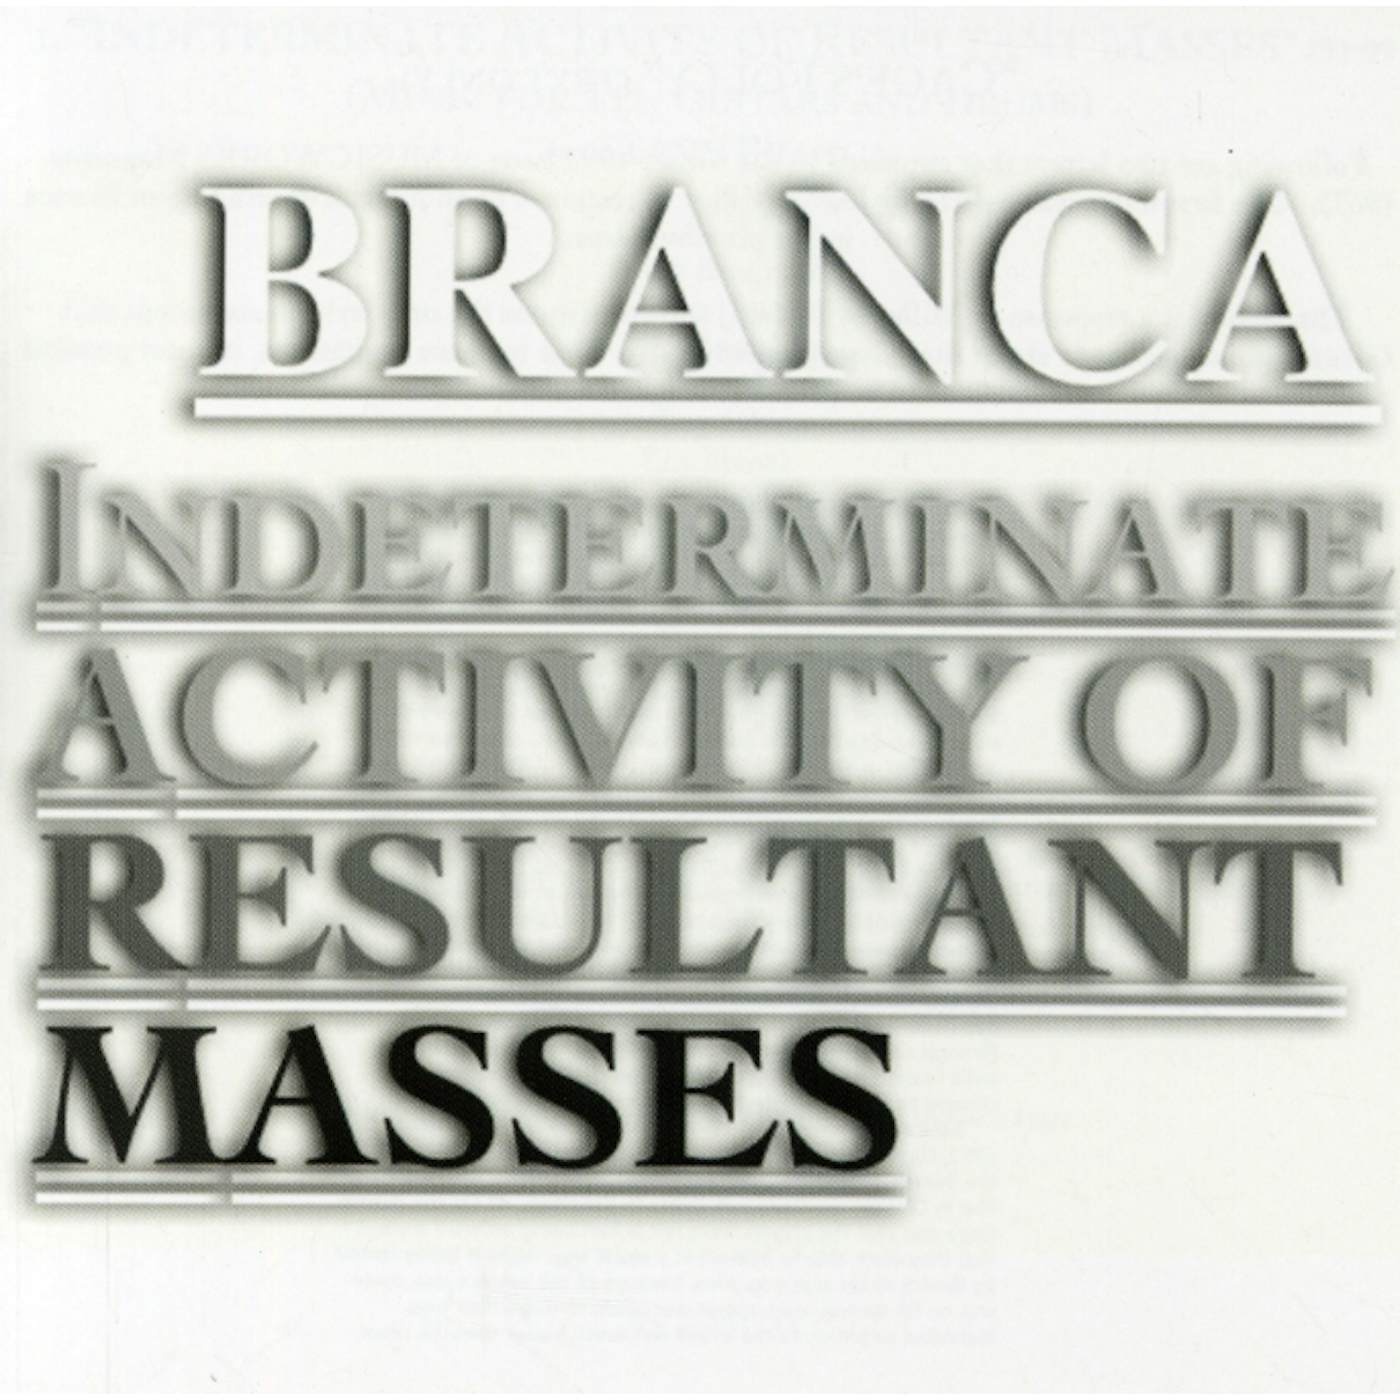 Glenn Branca INDETERMINATE ACTIVITY OF RESULTANT MASSES CD